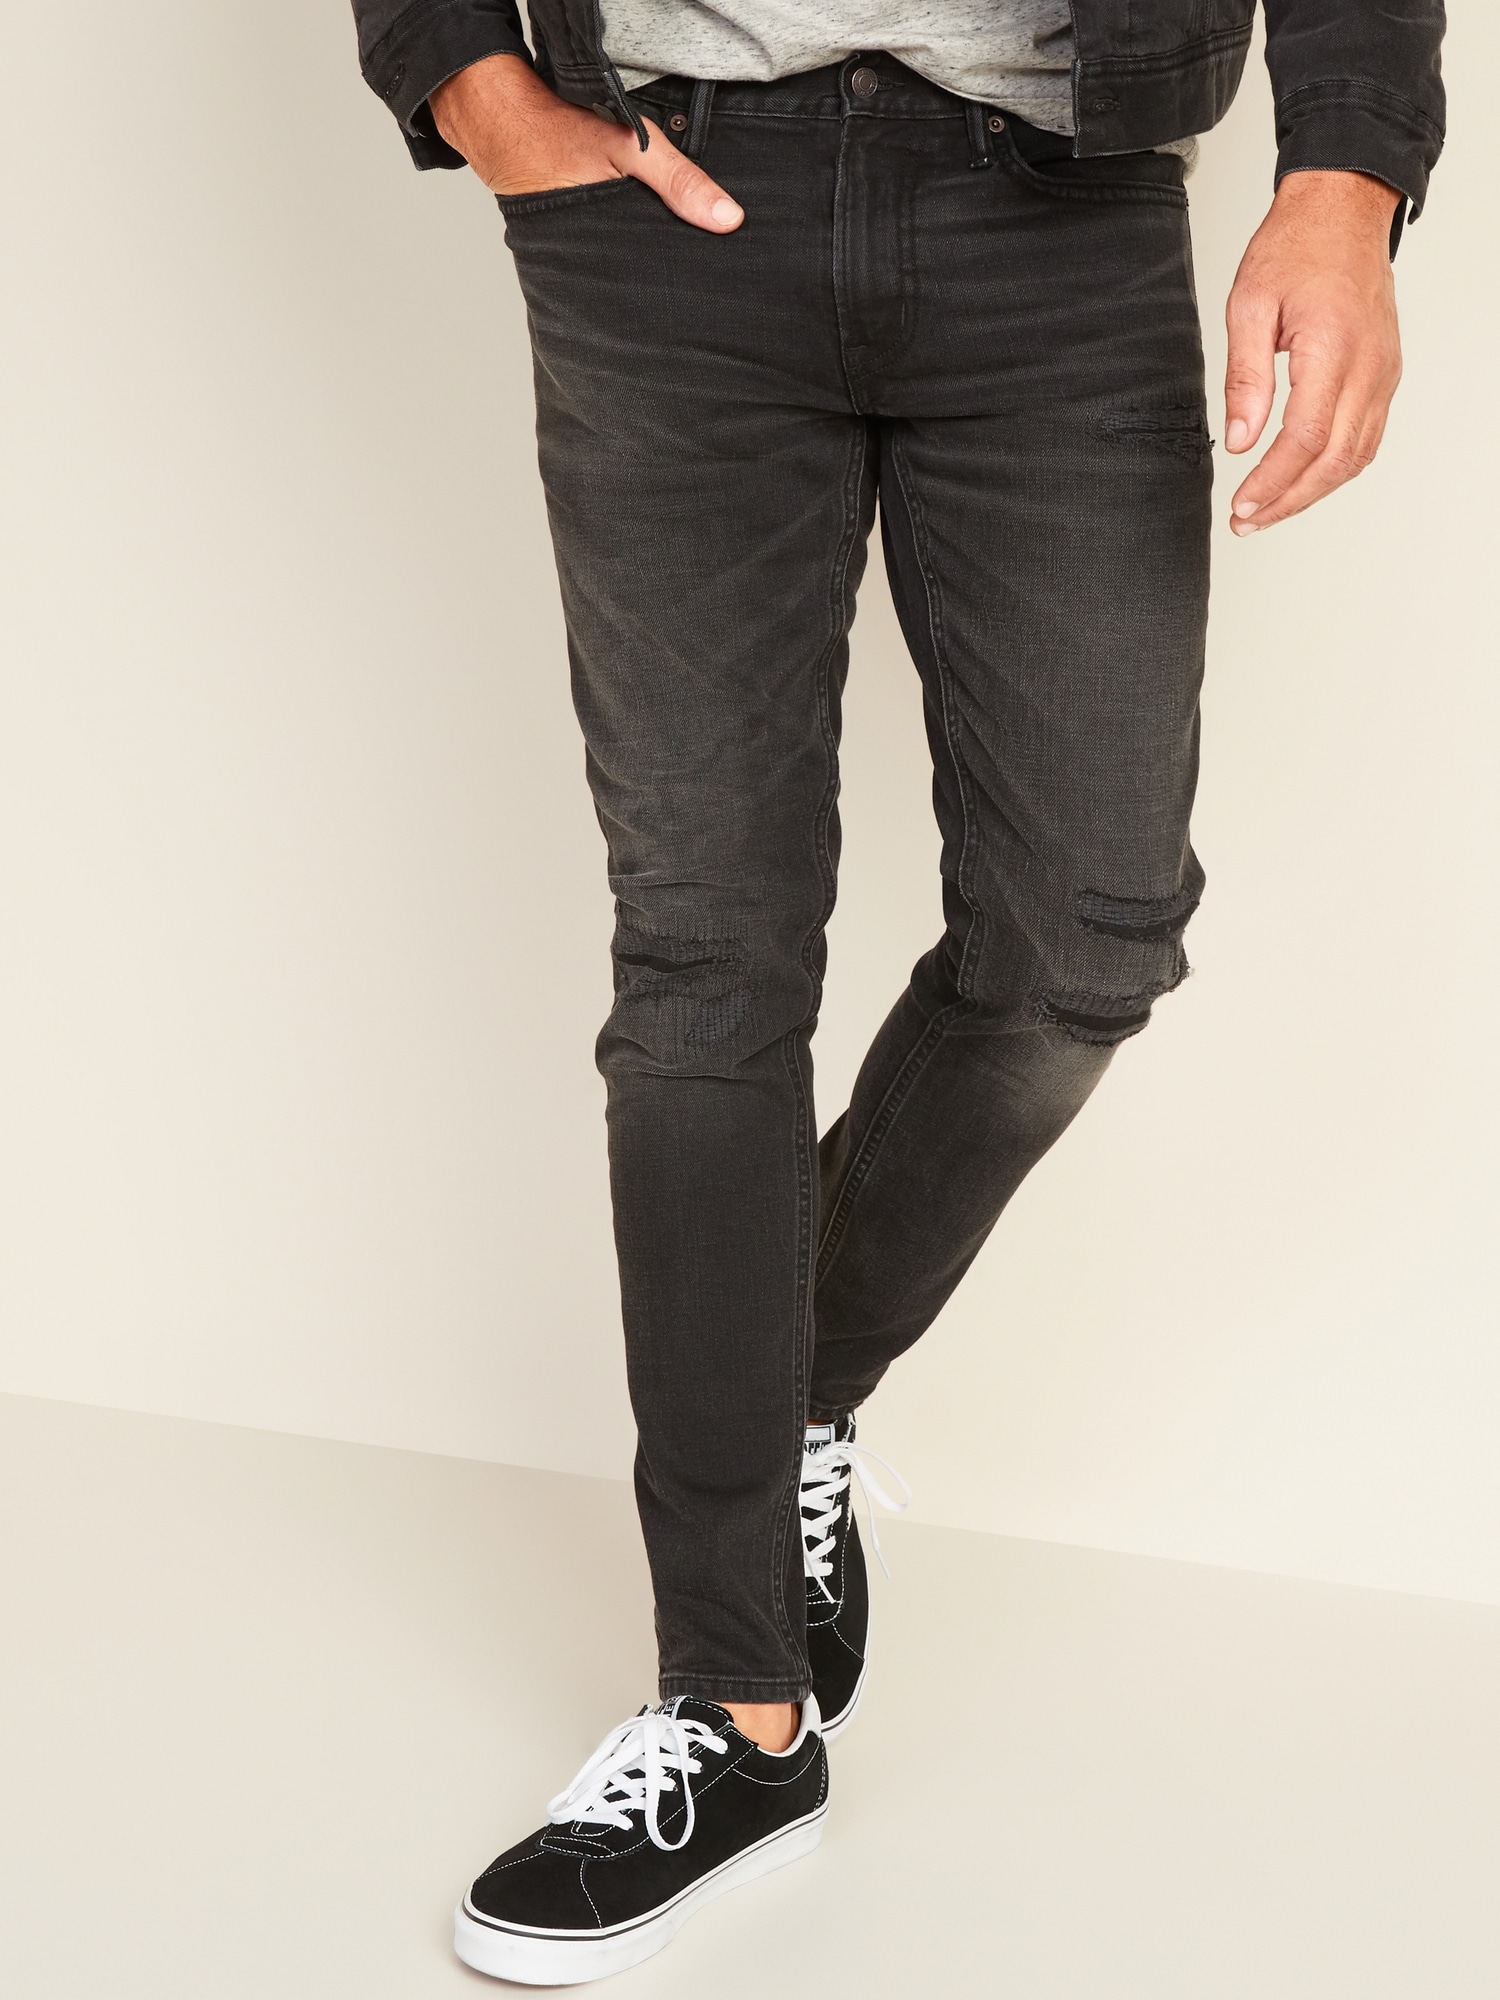 mens grey black jeans